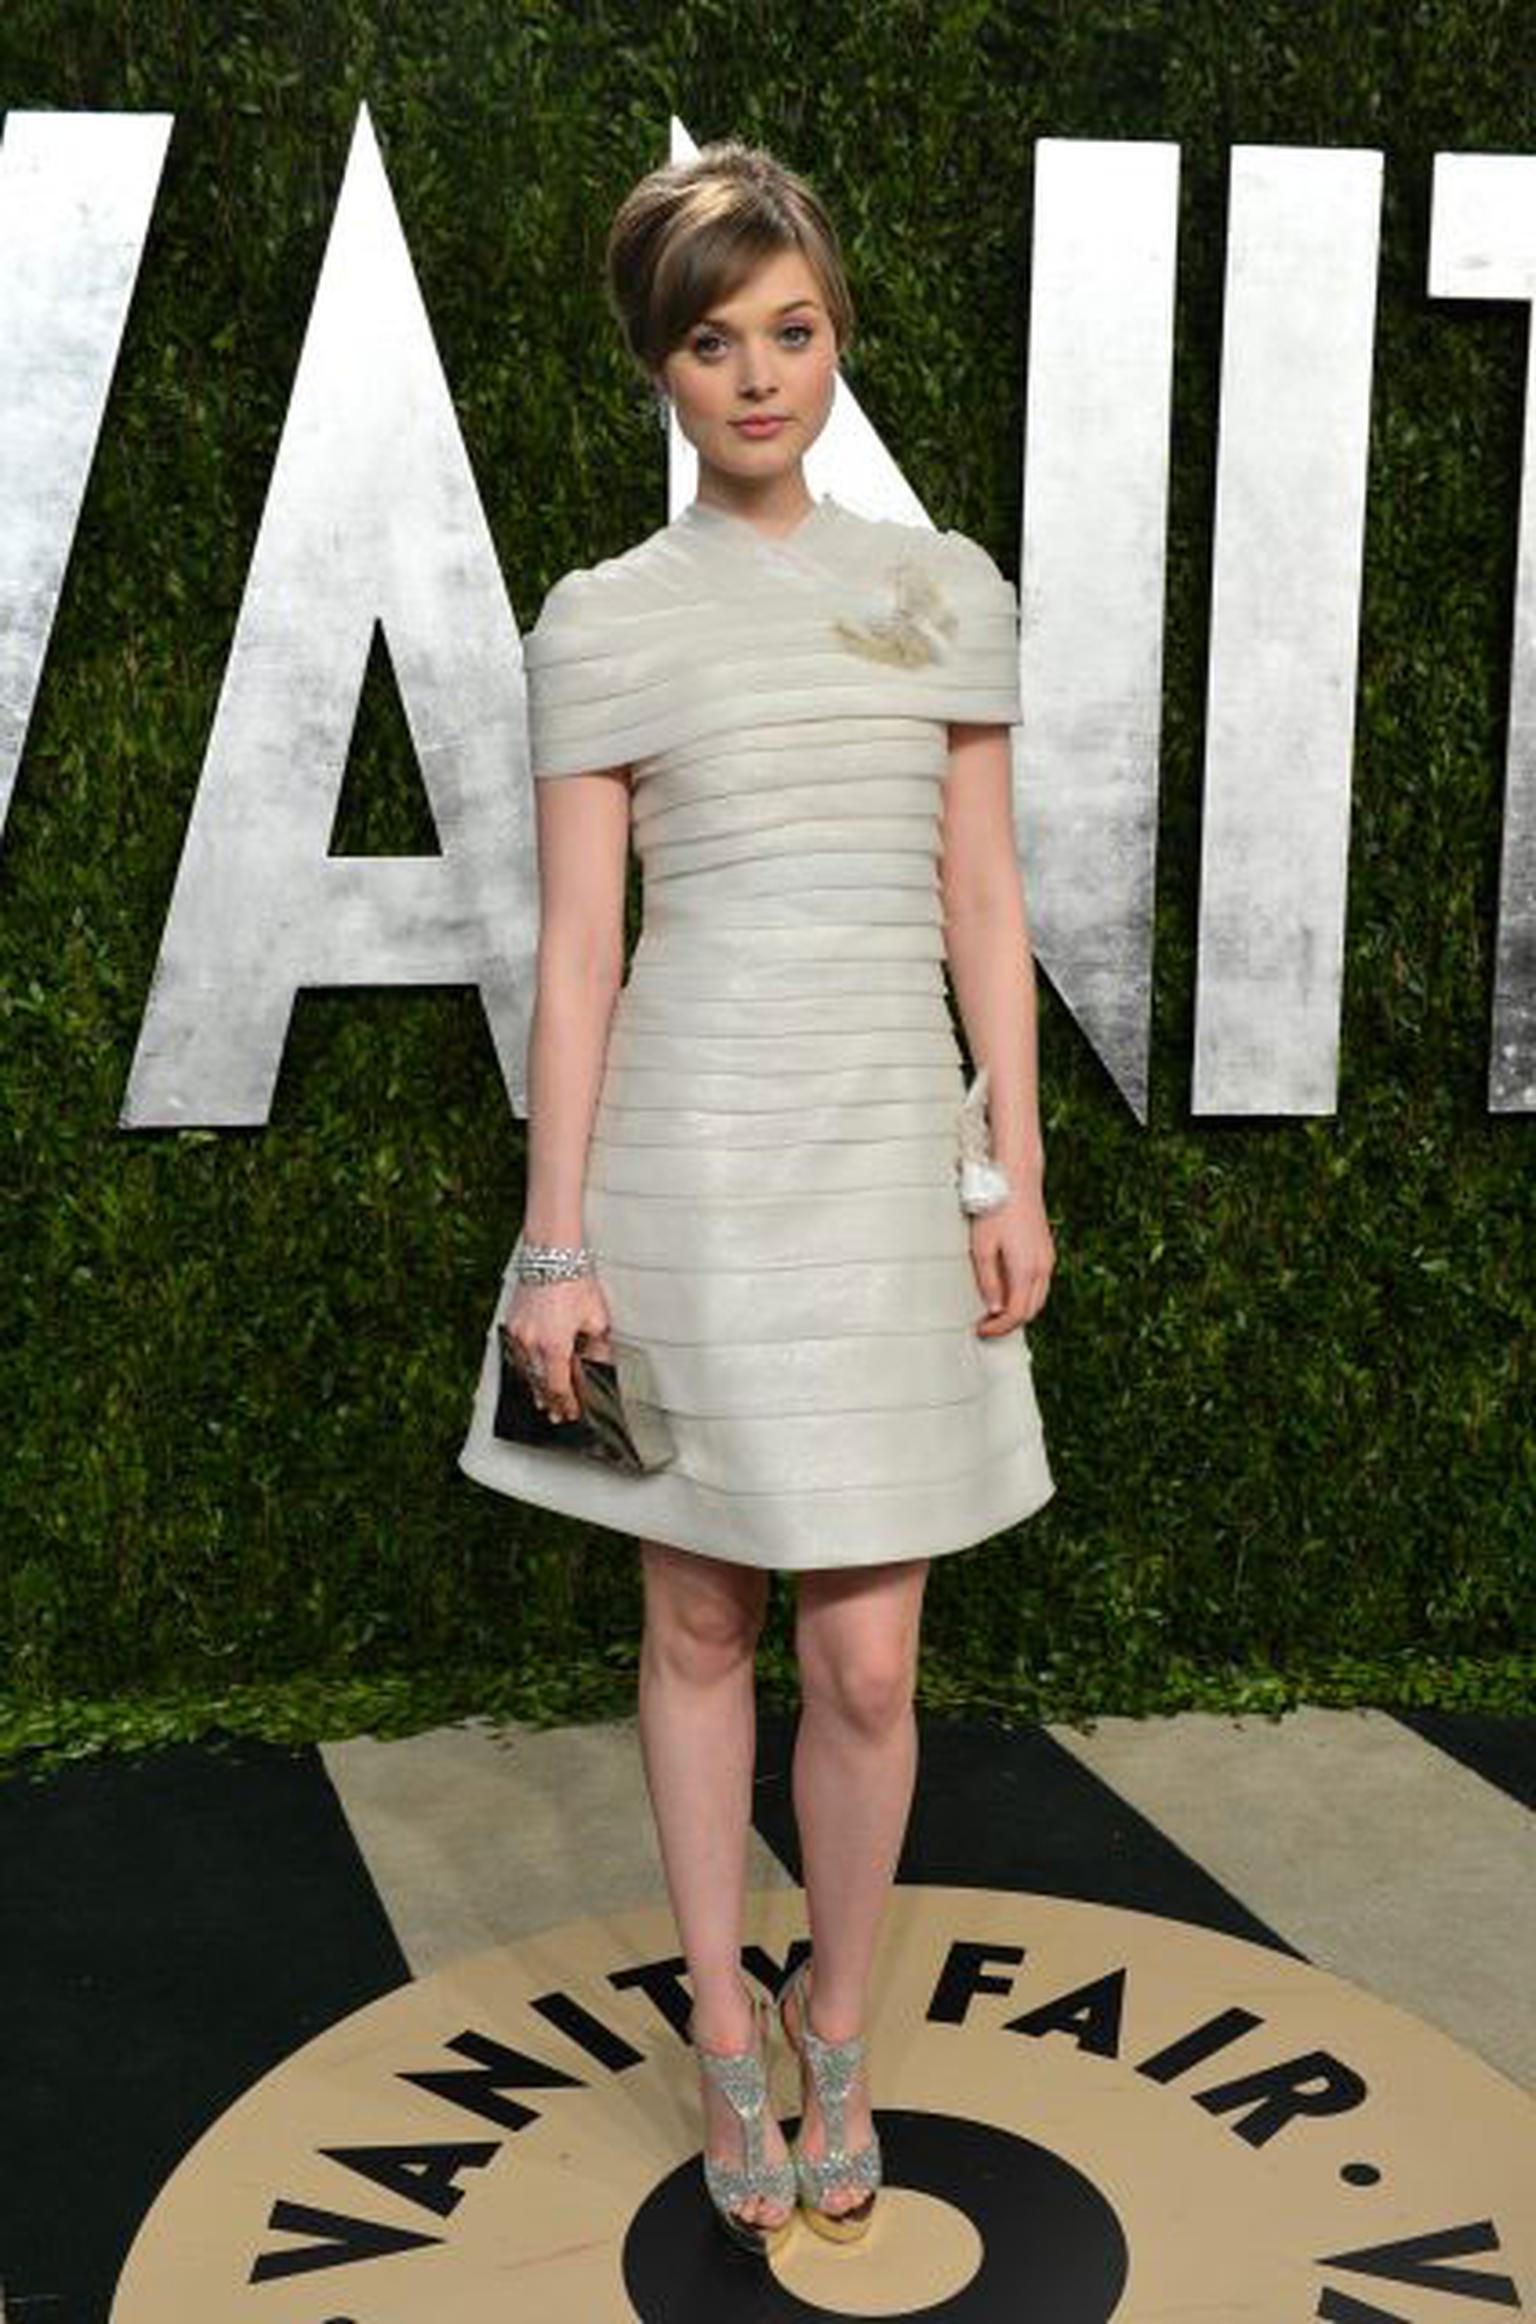 Chanel-Bella-Heathcote-2---Oscars-2013.jpg